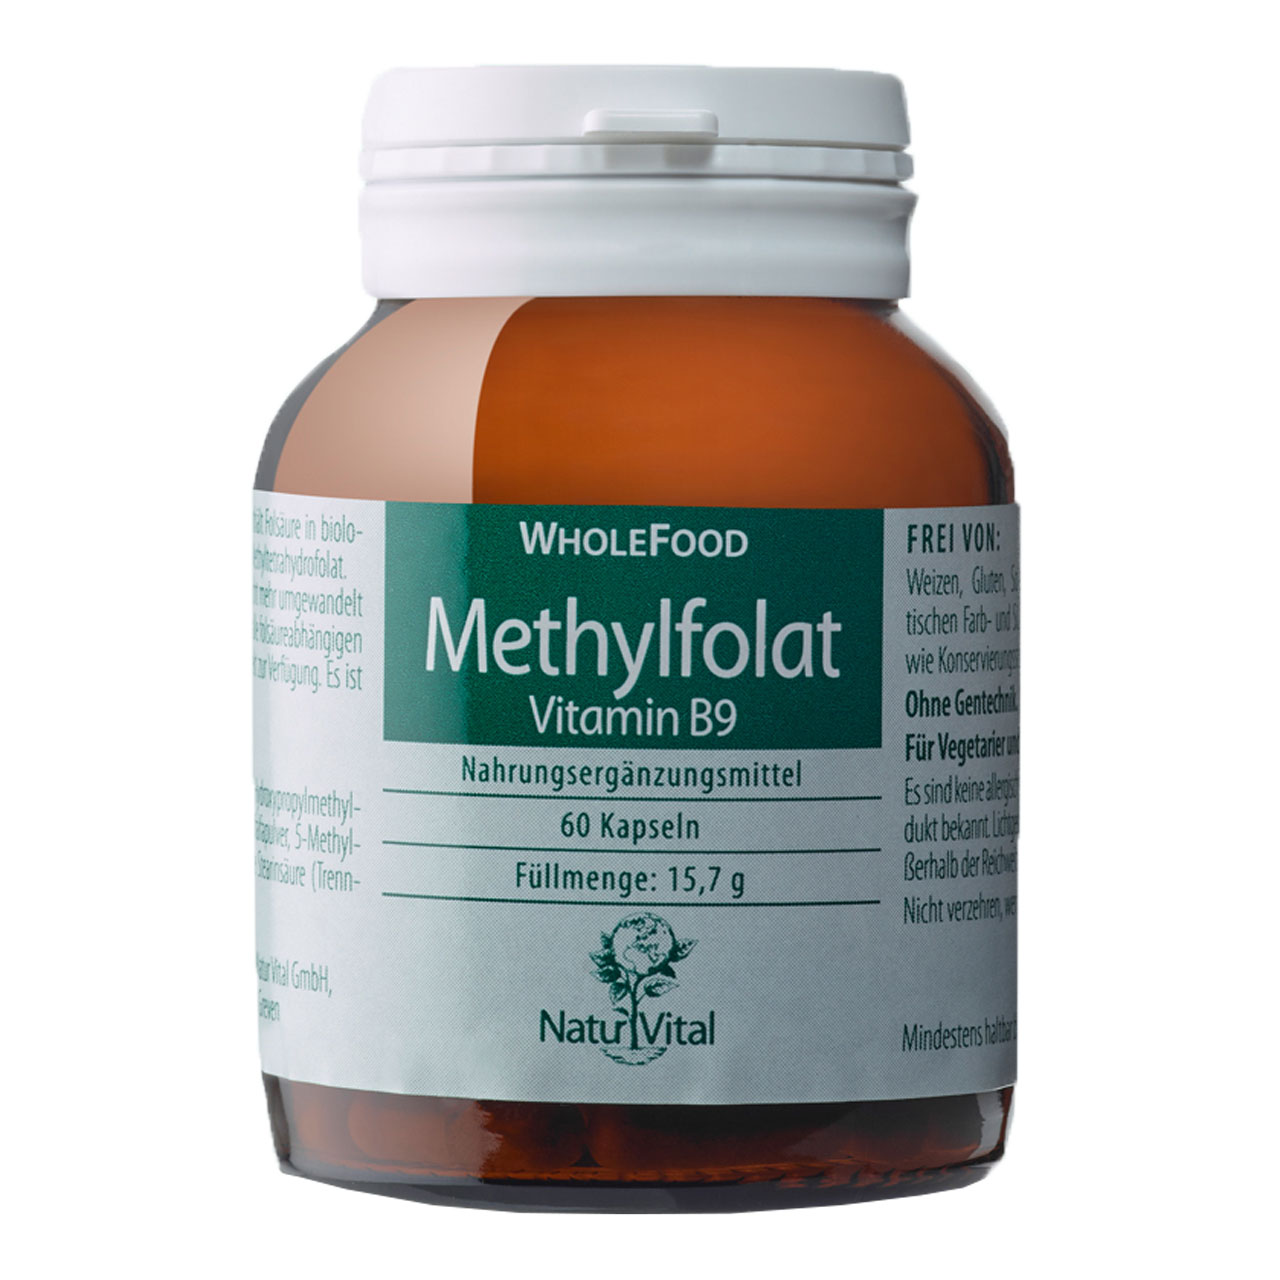 Methylfolat von Natur Vital beinhaltet 60 Kapseln